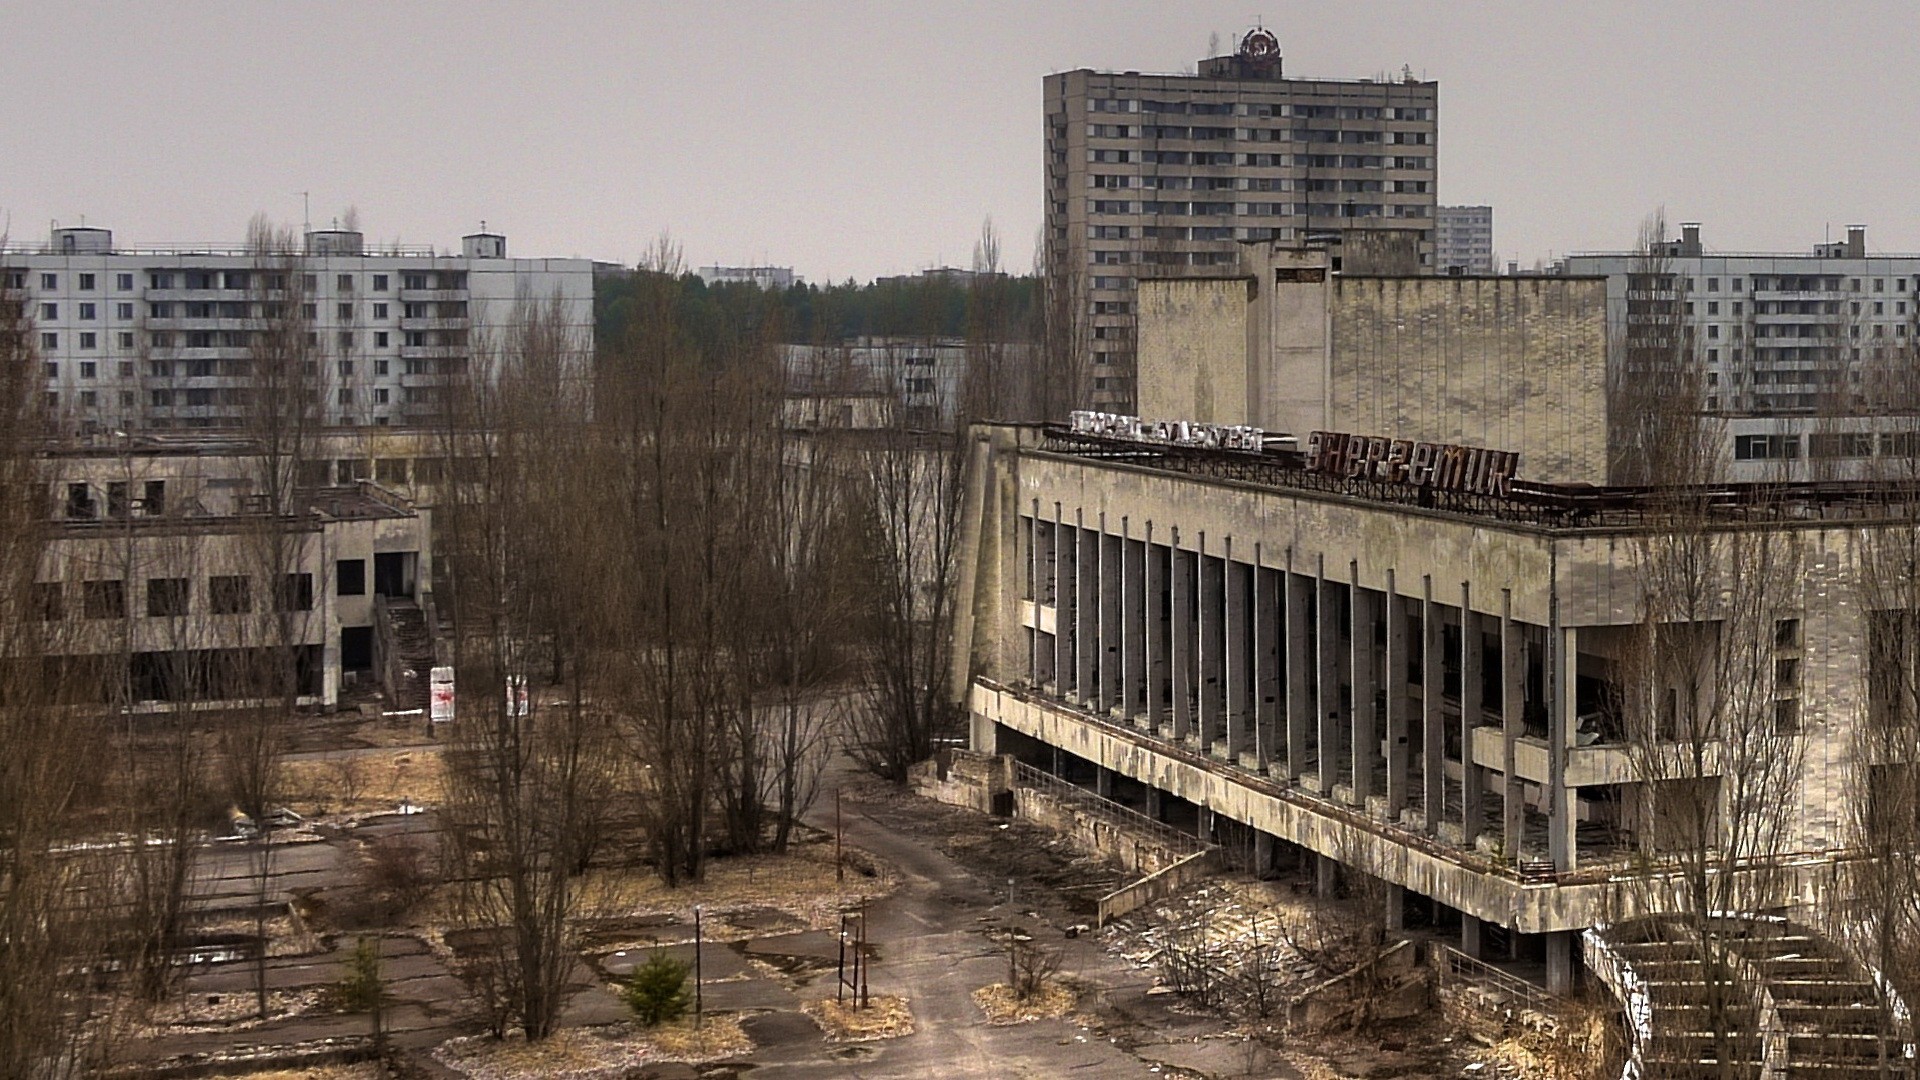 Pripyat HD wallpapers, Desktop wallpaper - most viewed